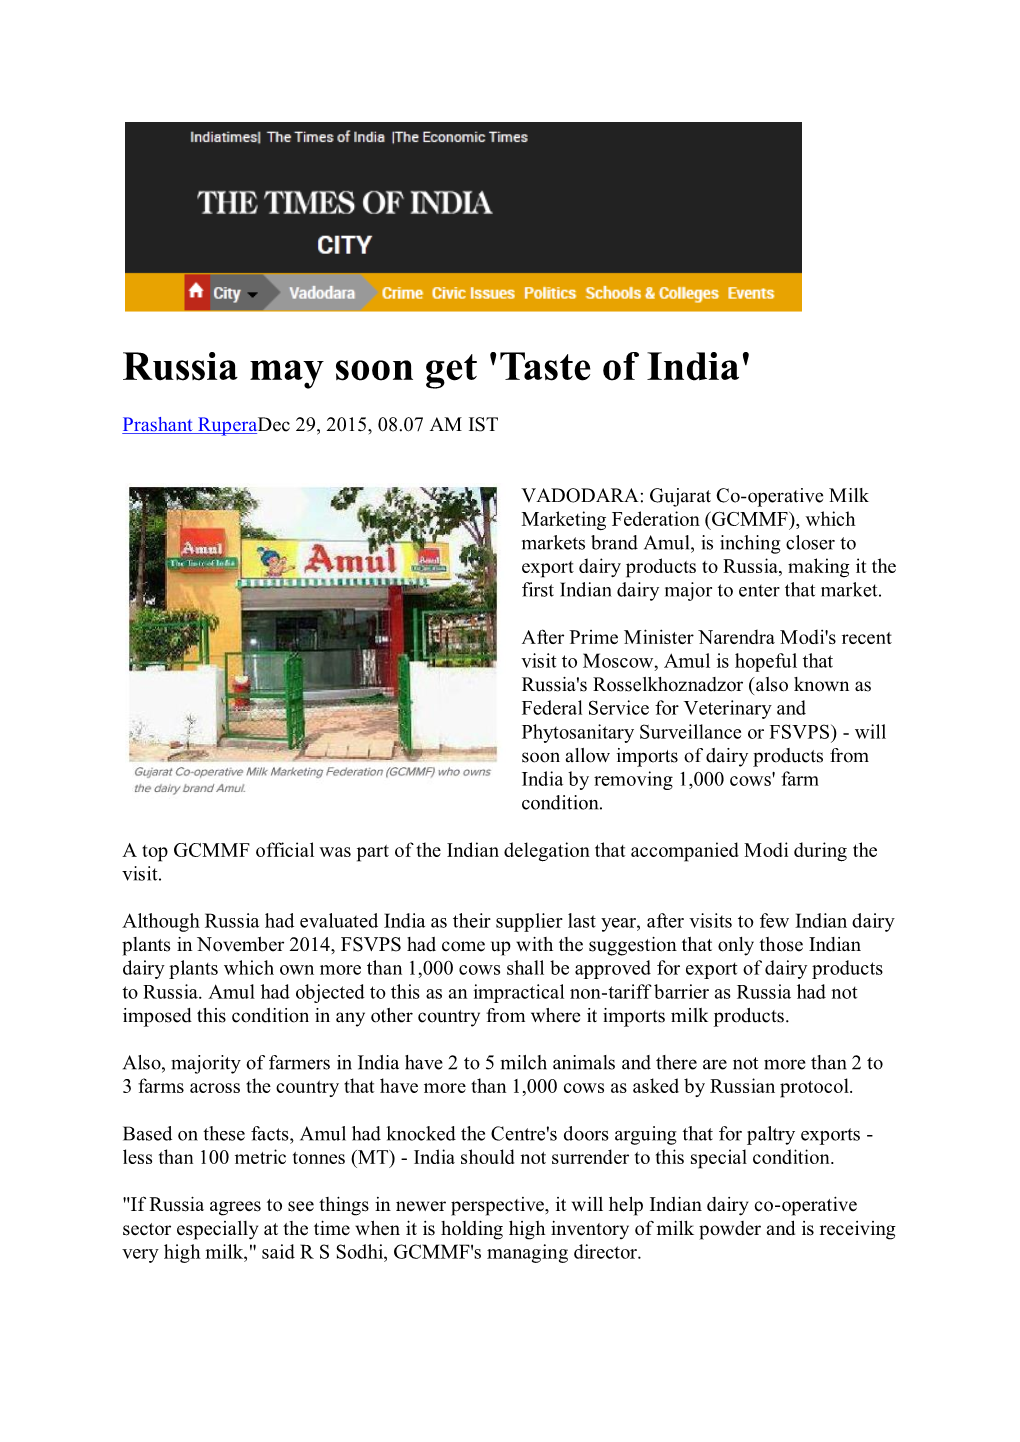 Russia May Soon Get 'Taste of India'